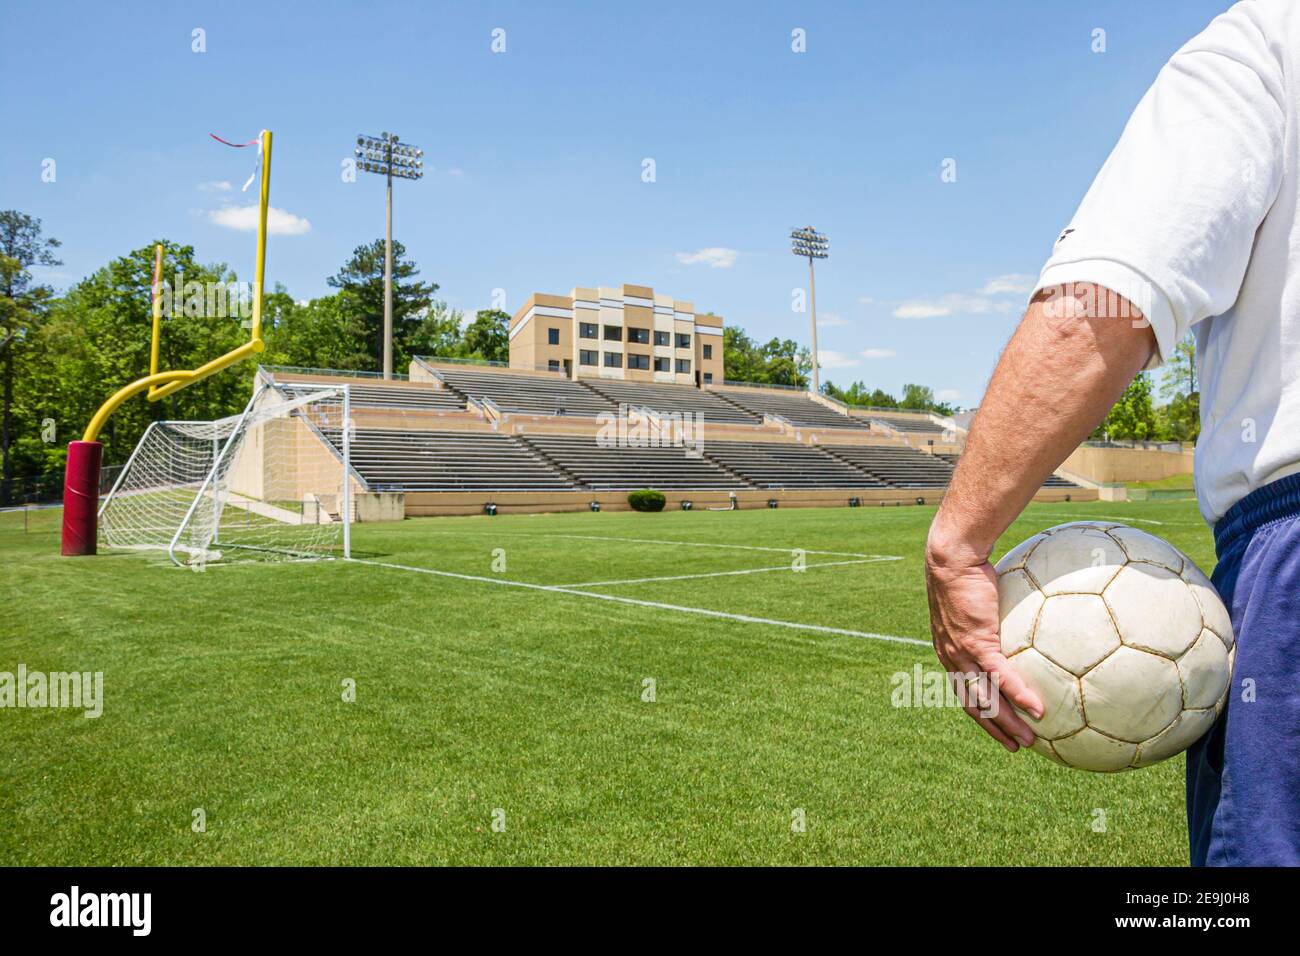 Alabama Alexander City Charles Bailey Sportplex, Fußballfeld Fußball Fußball Fußball Fußball Futbol Ball, Stockfoto